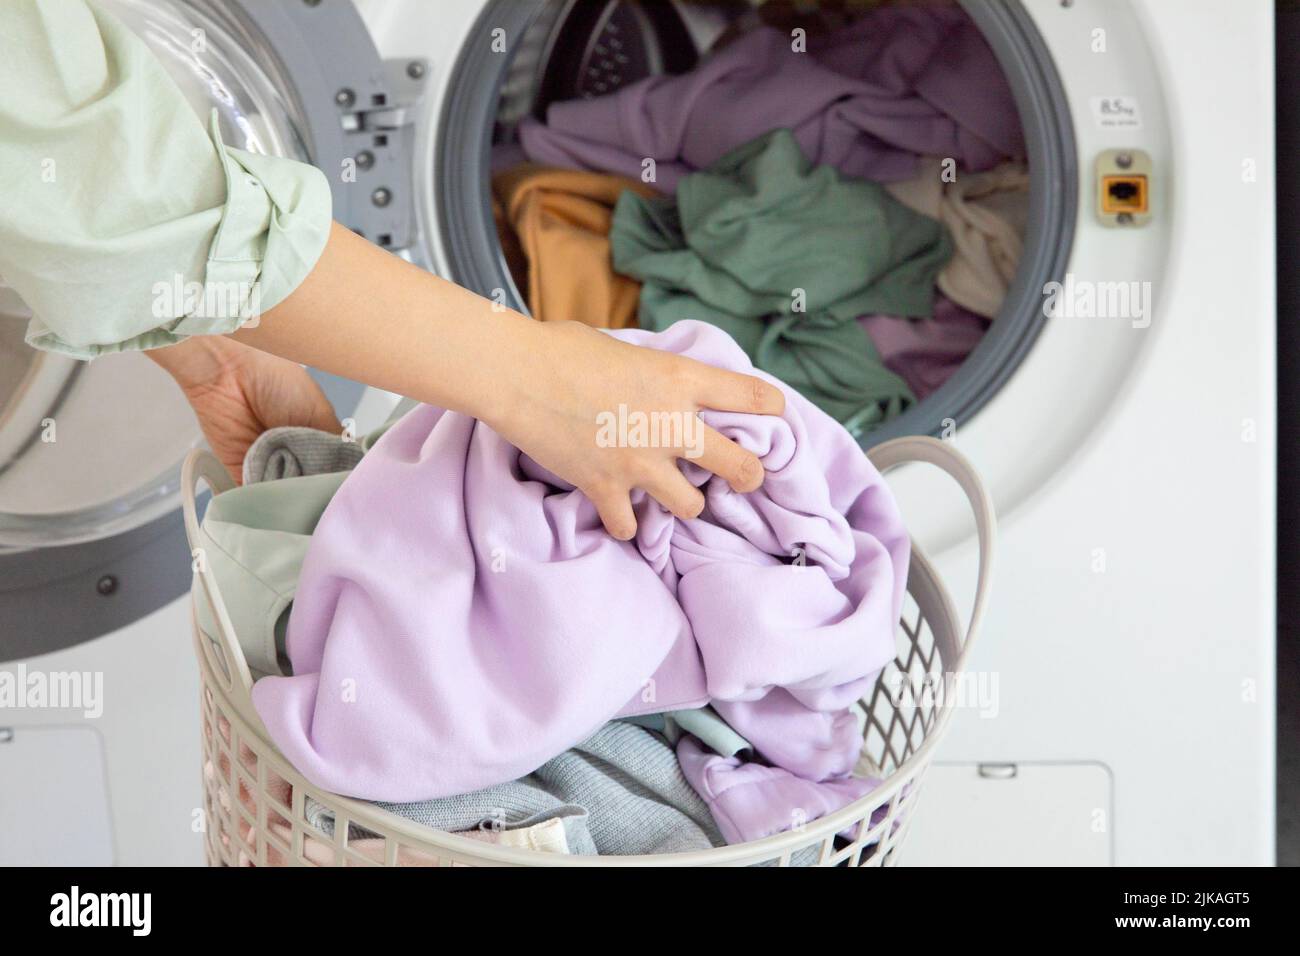 aesthetic laundry concept Putting laundry into the washing machine Stock Photo - Alamy